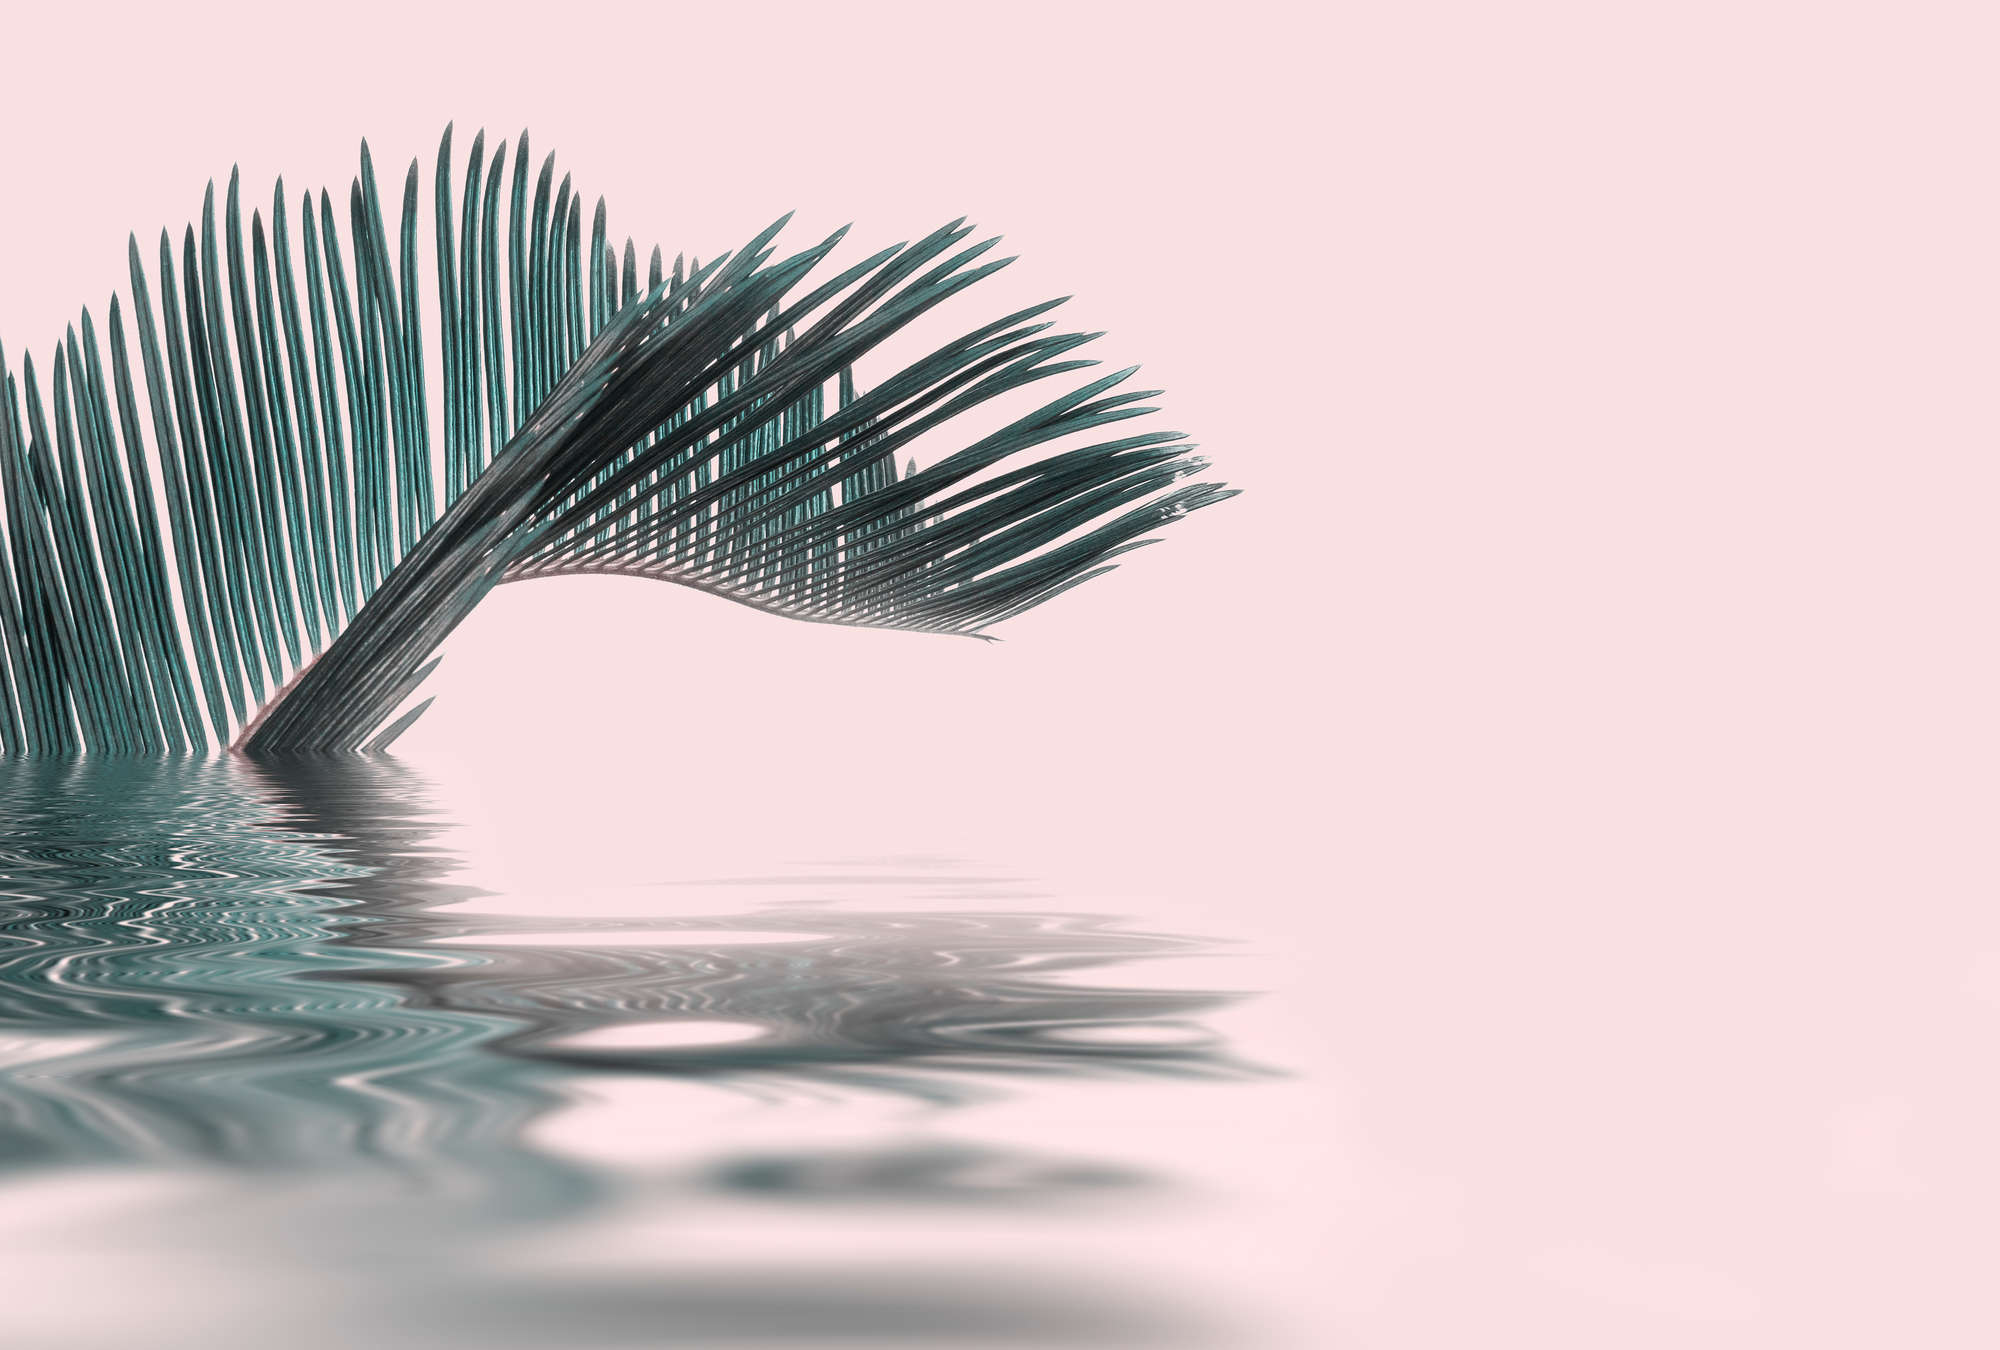             Fototapete Palmenblatt im Wasser – Grün & Rosa
        